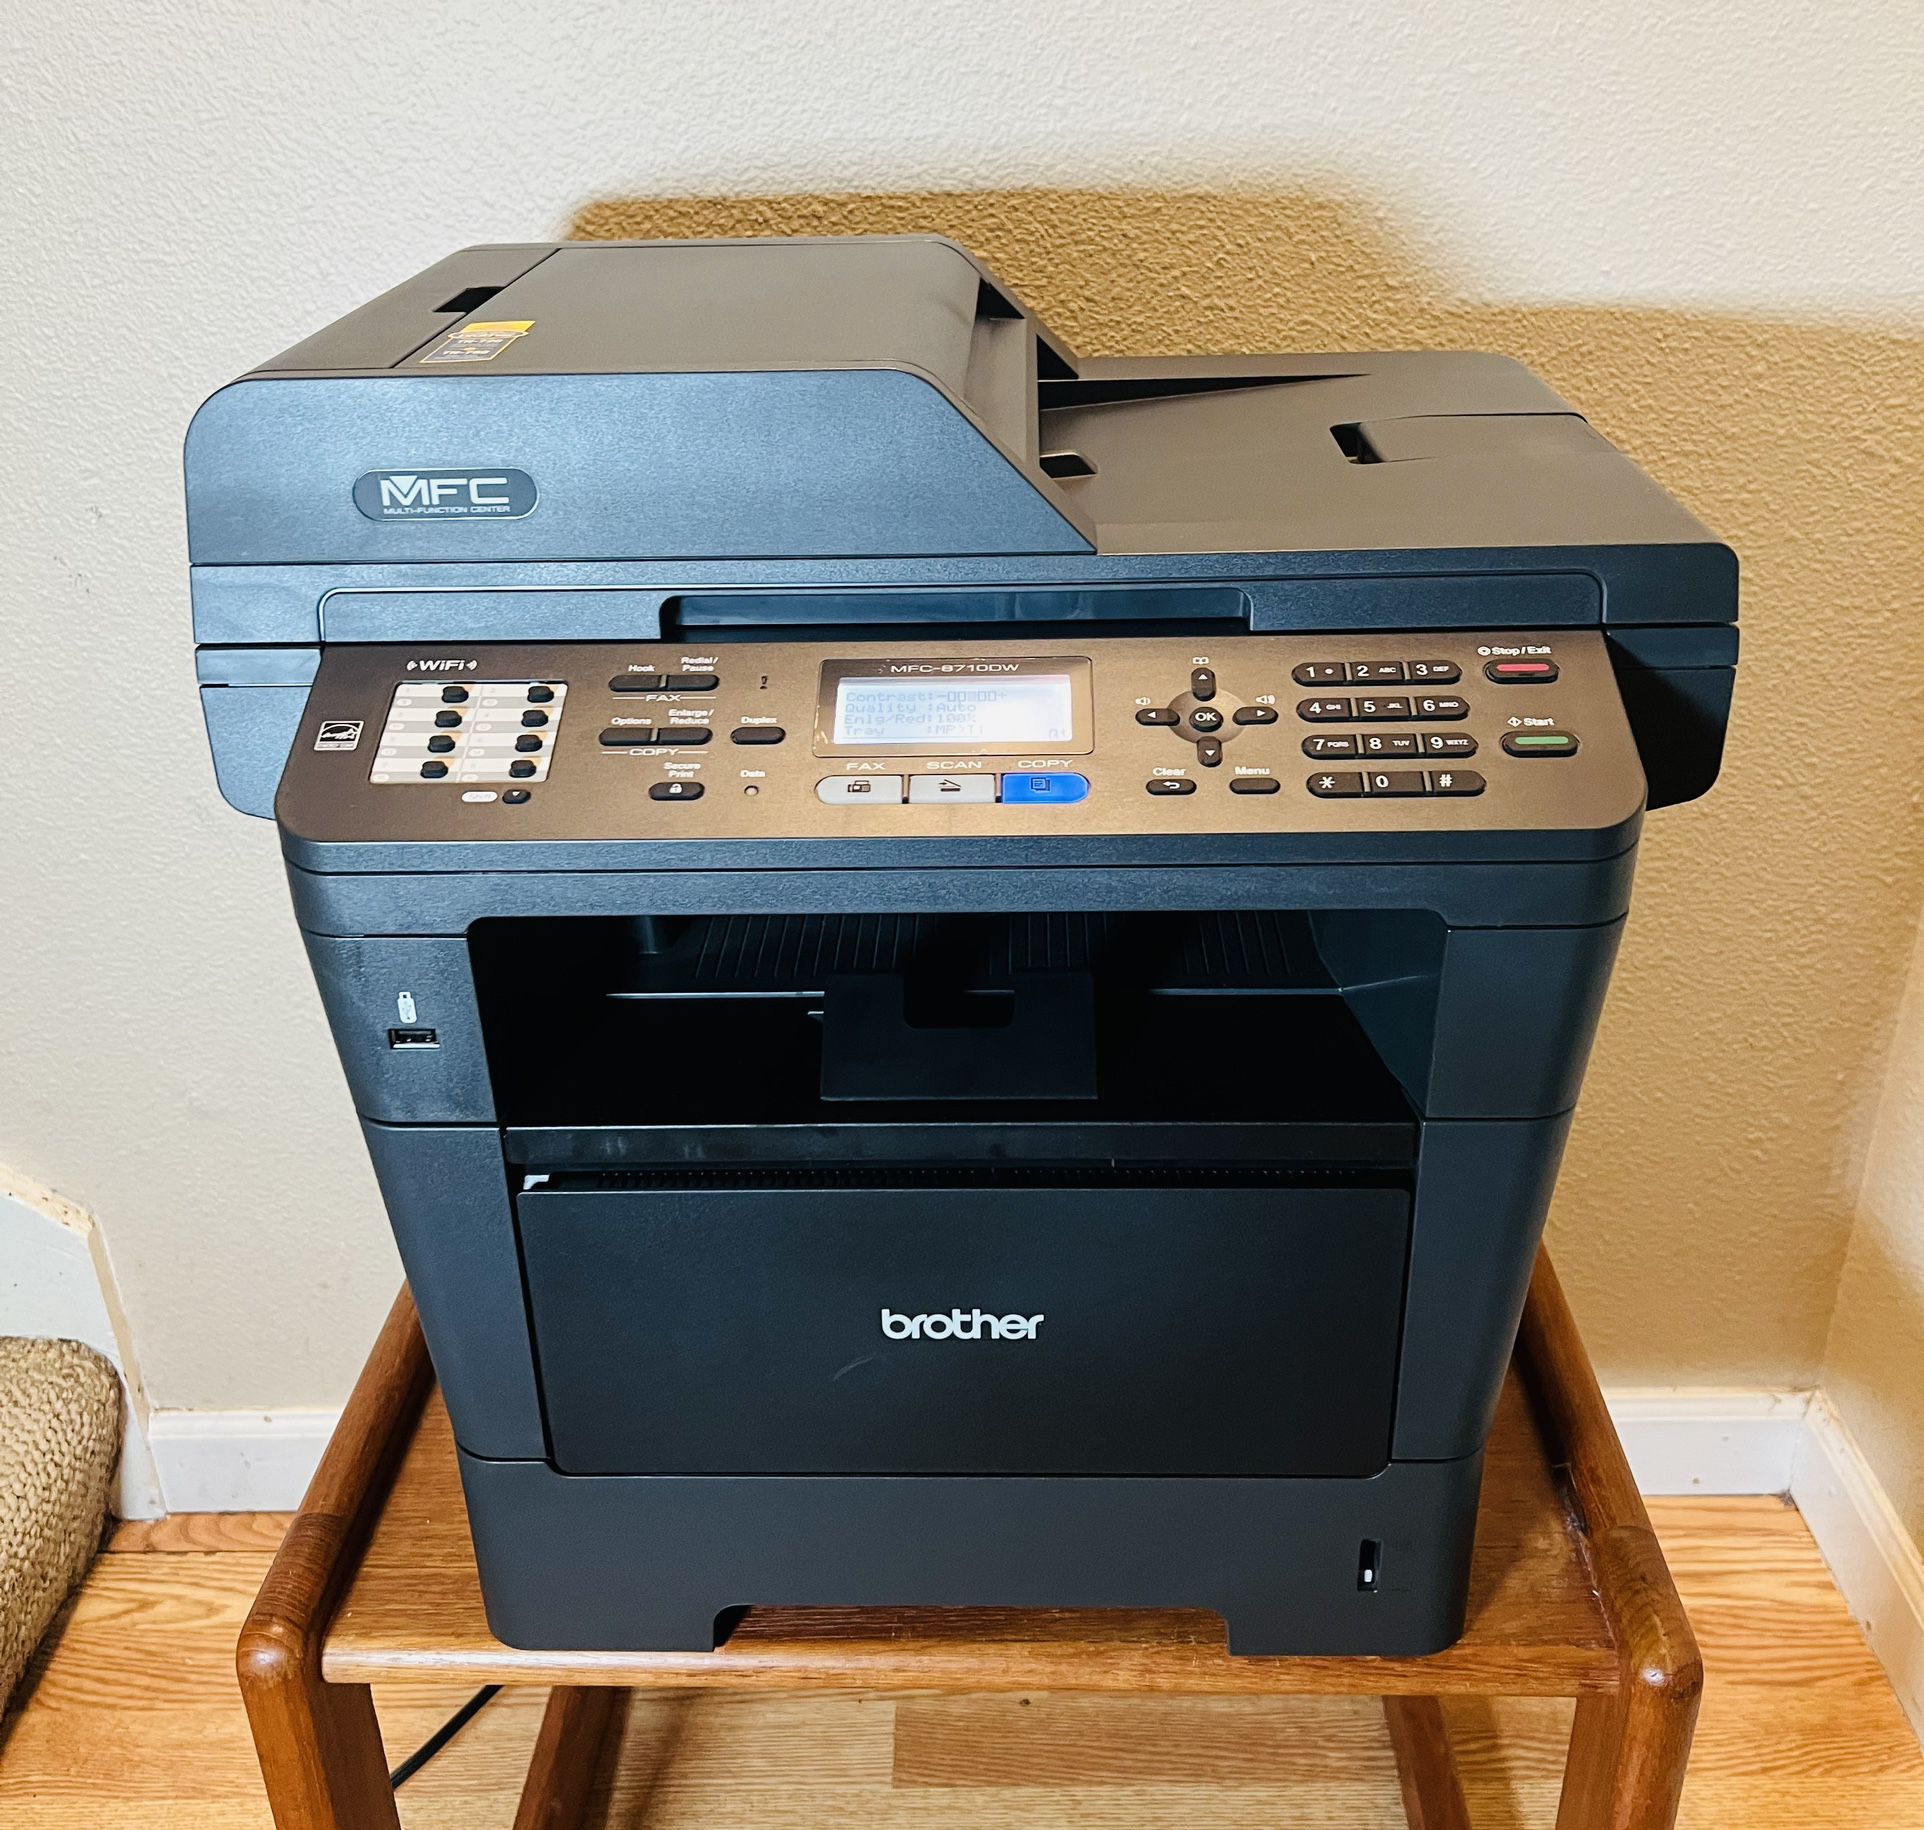 Brother Printer MFC8710DW Wireless Monochrome Printer with Scanner, Copier and Fax, Amazon Dash Replenishment Ready